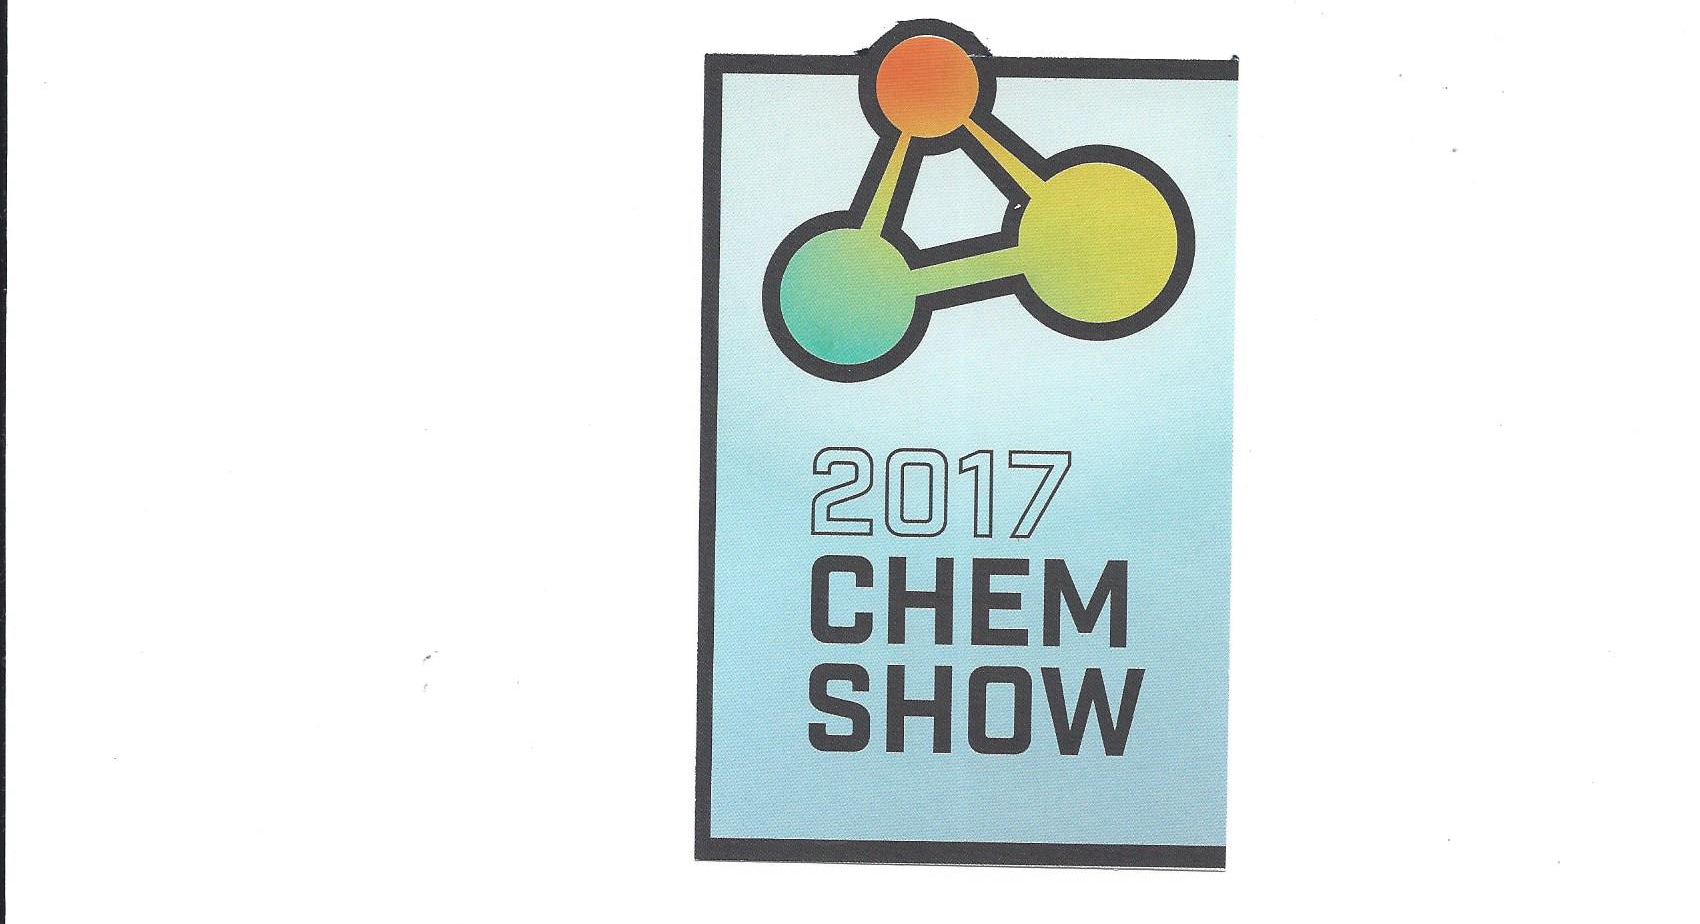 Chem Show 2017